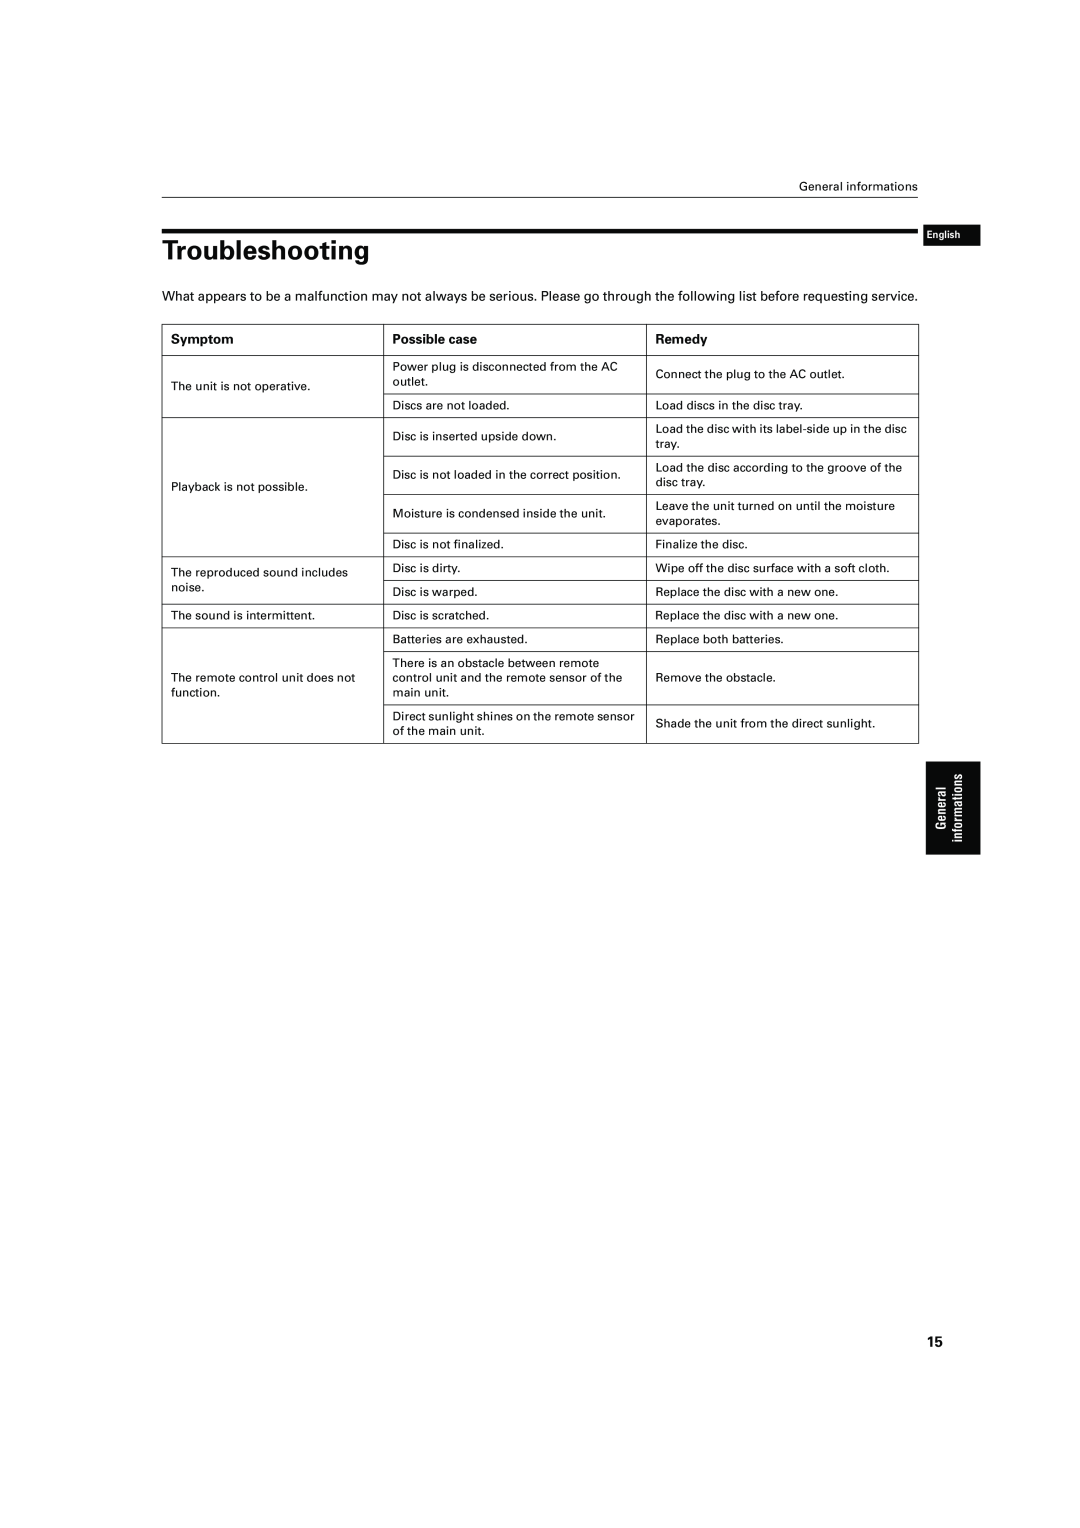 JVC XL-FZ700 manual Troubleshooting, Symptom, Possible case, Remedy, General, informations 